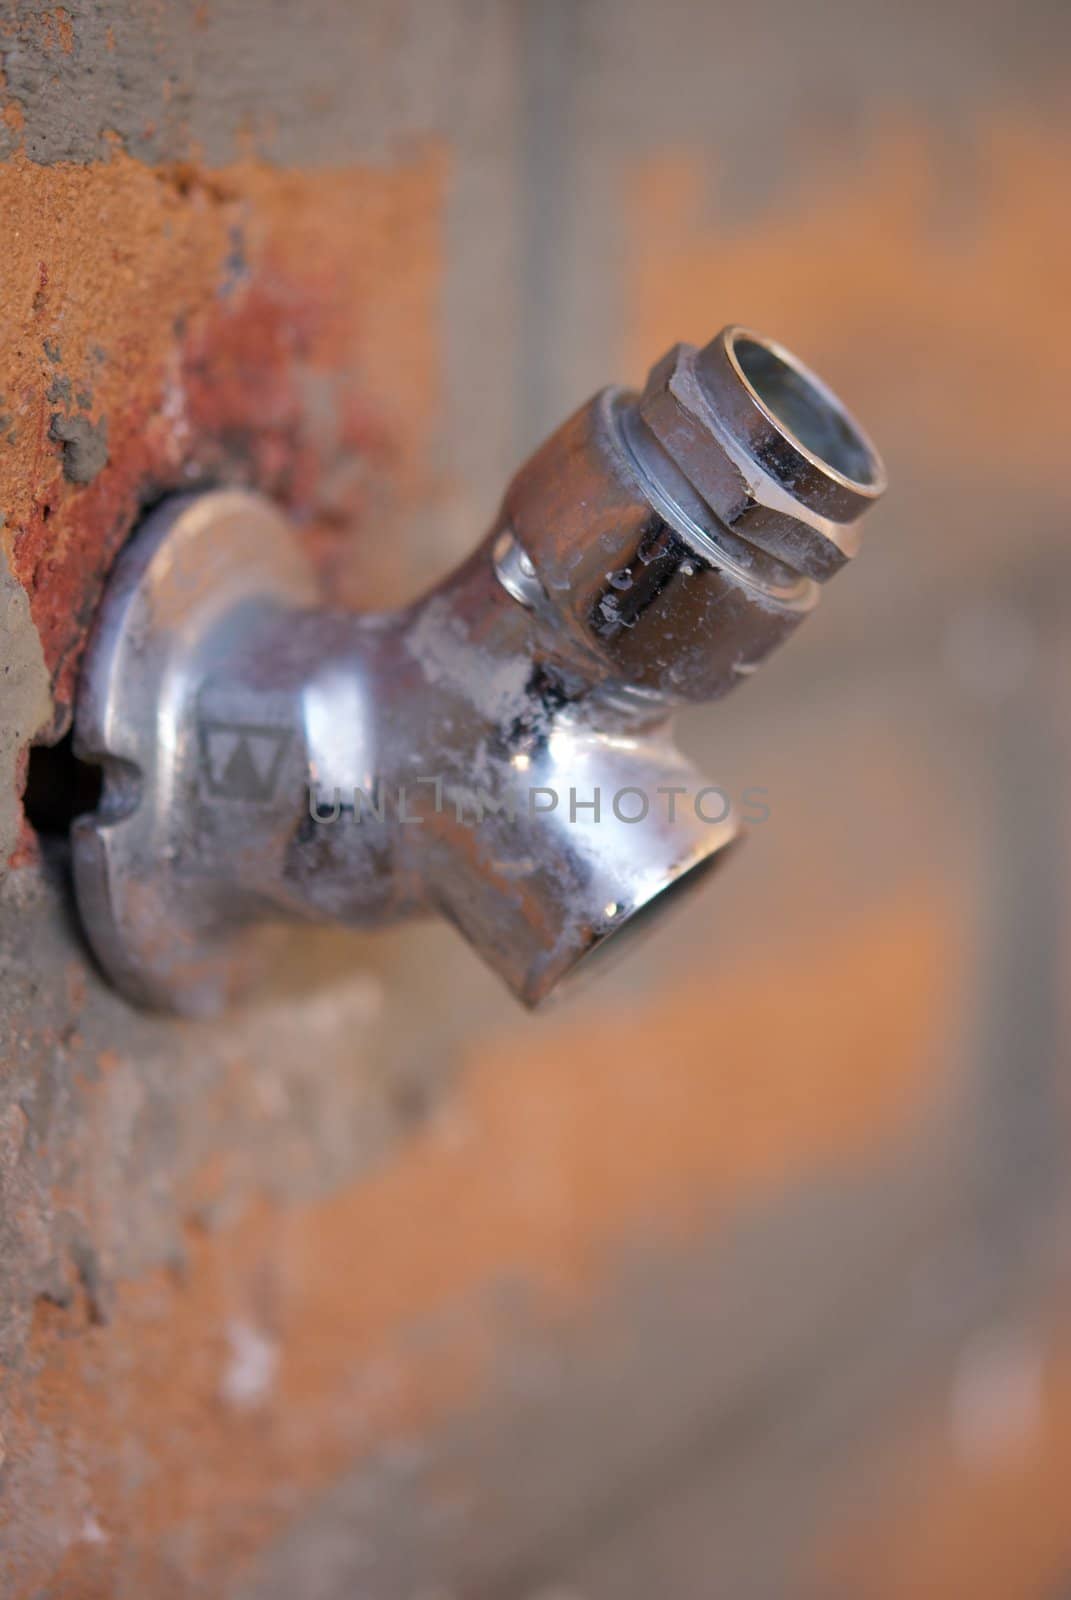 A chrome commercial grade hose bib or spygot on rough brick wall